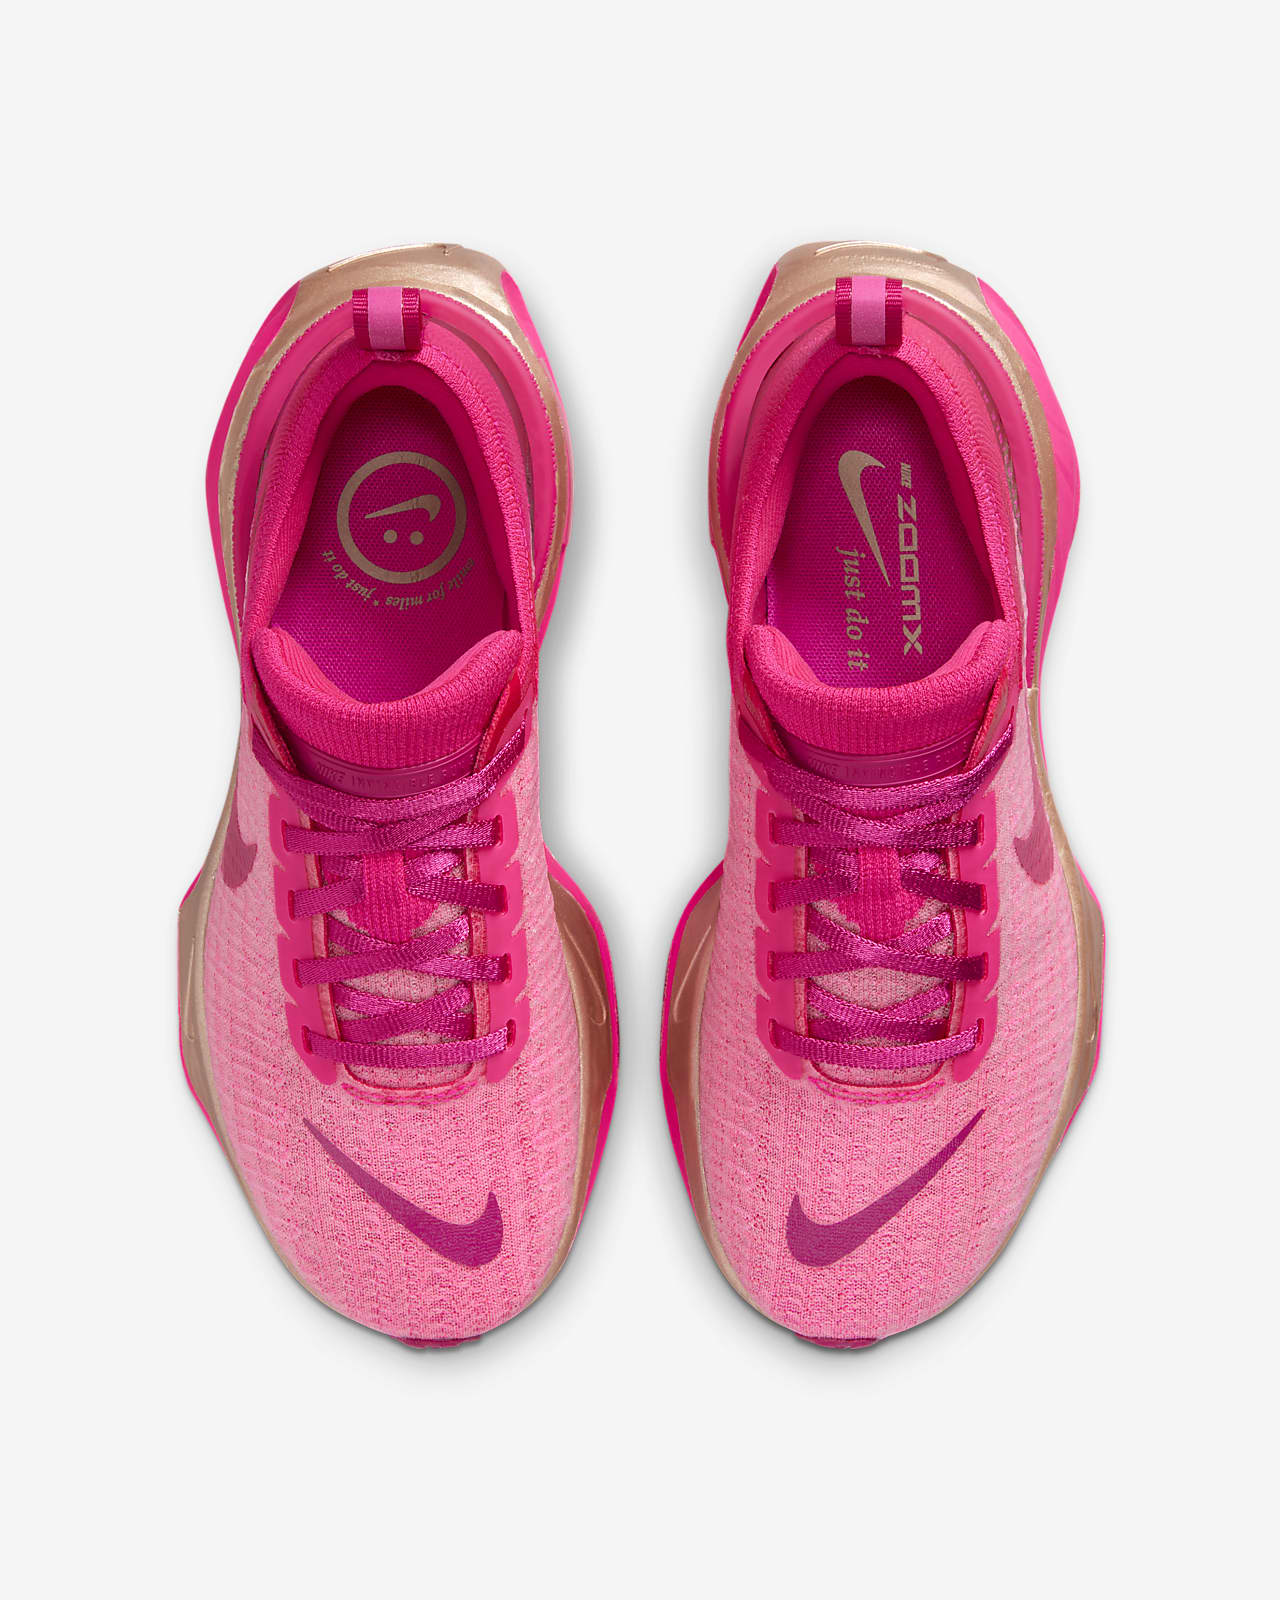 Nike Invincible 3 Women's Road Running Shoes